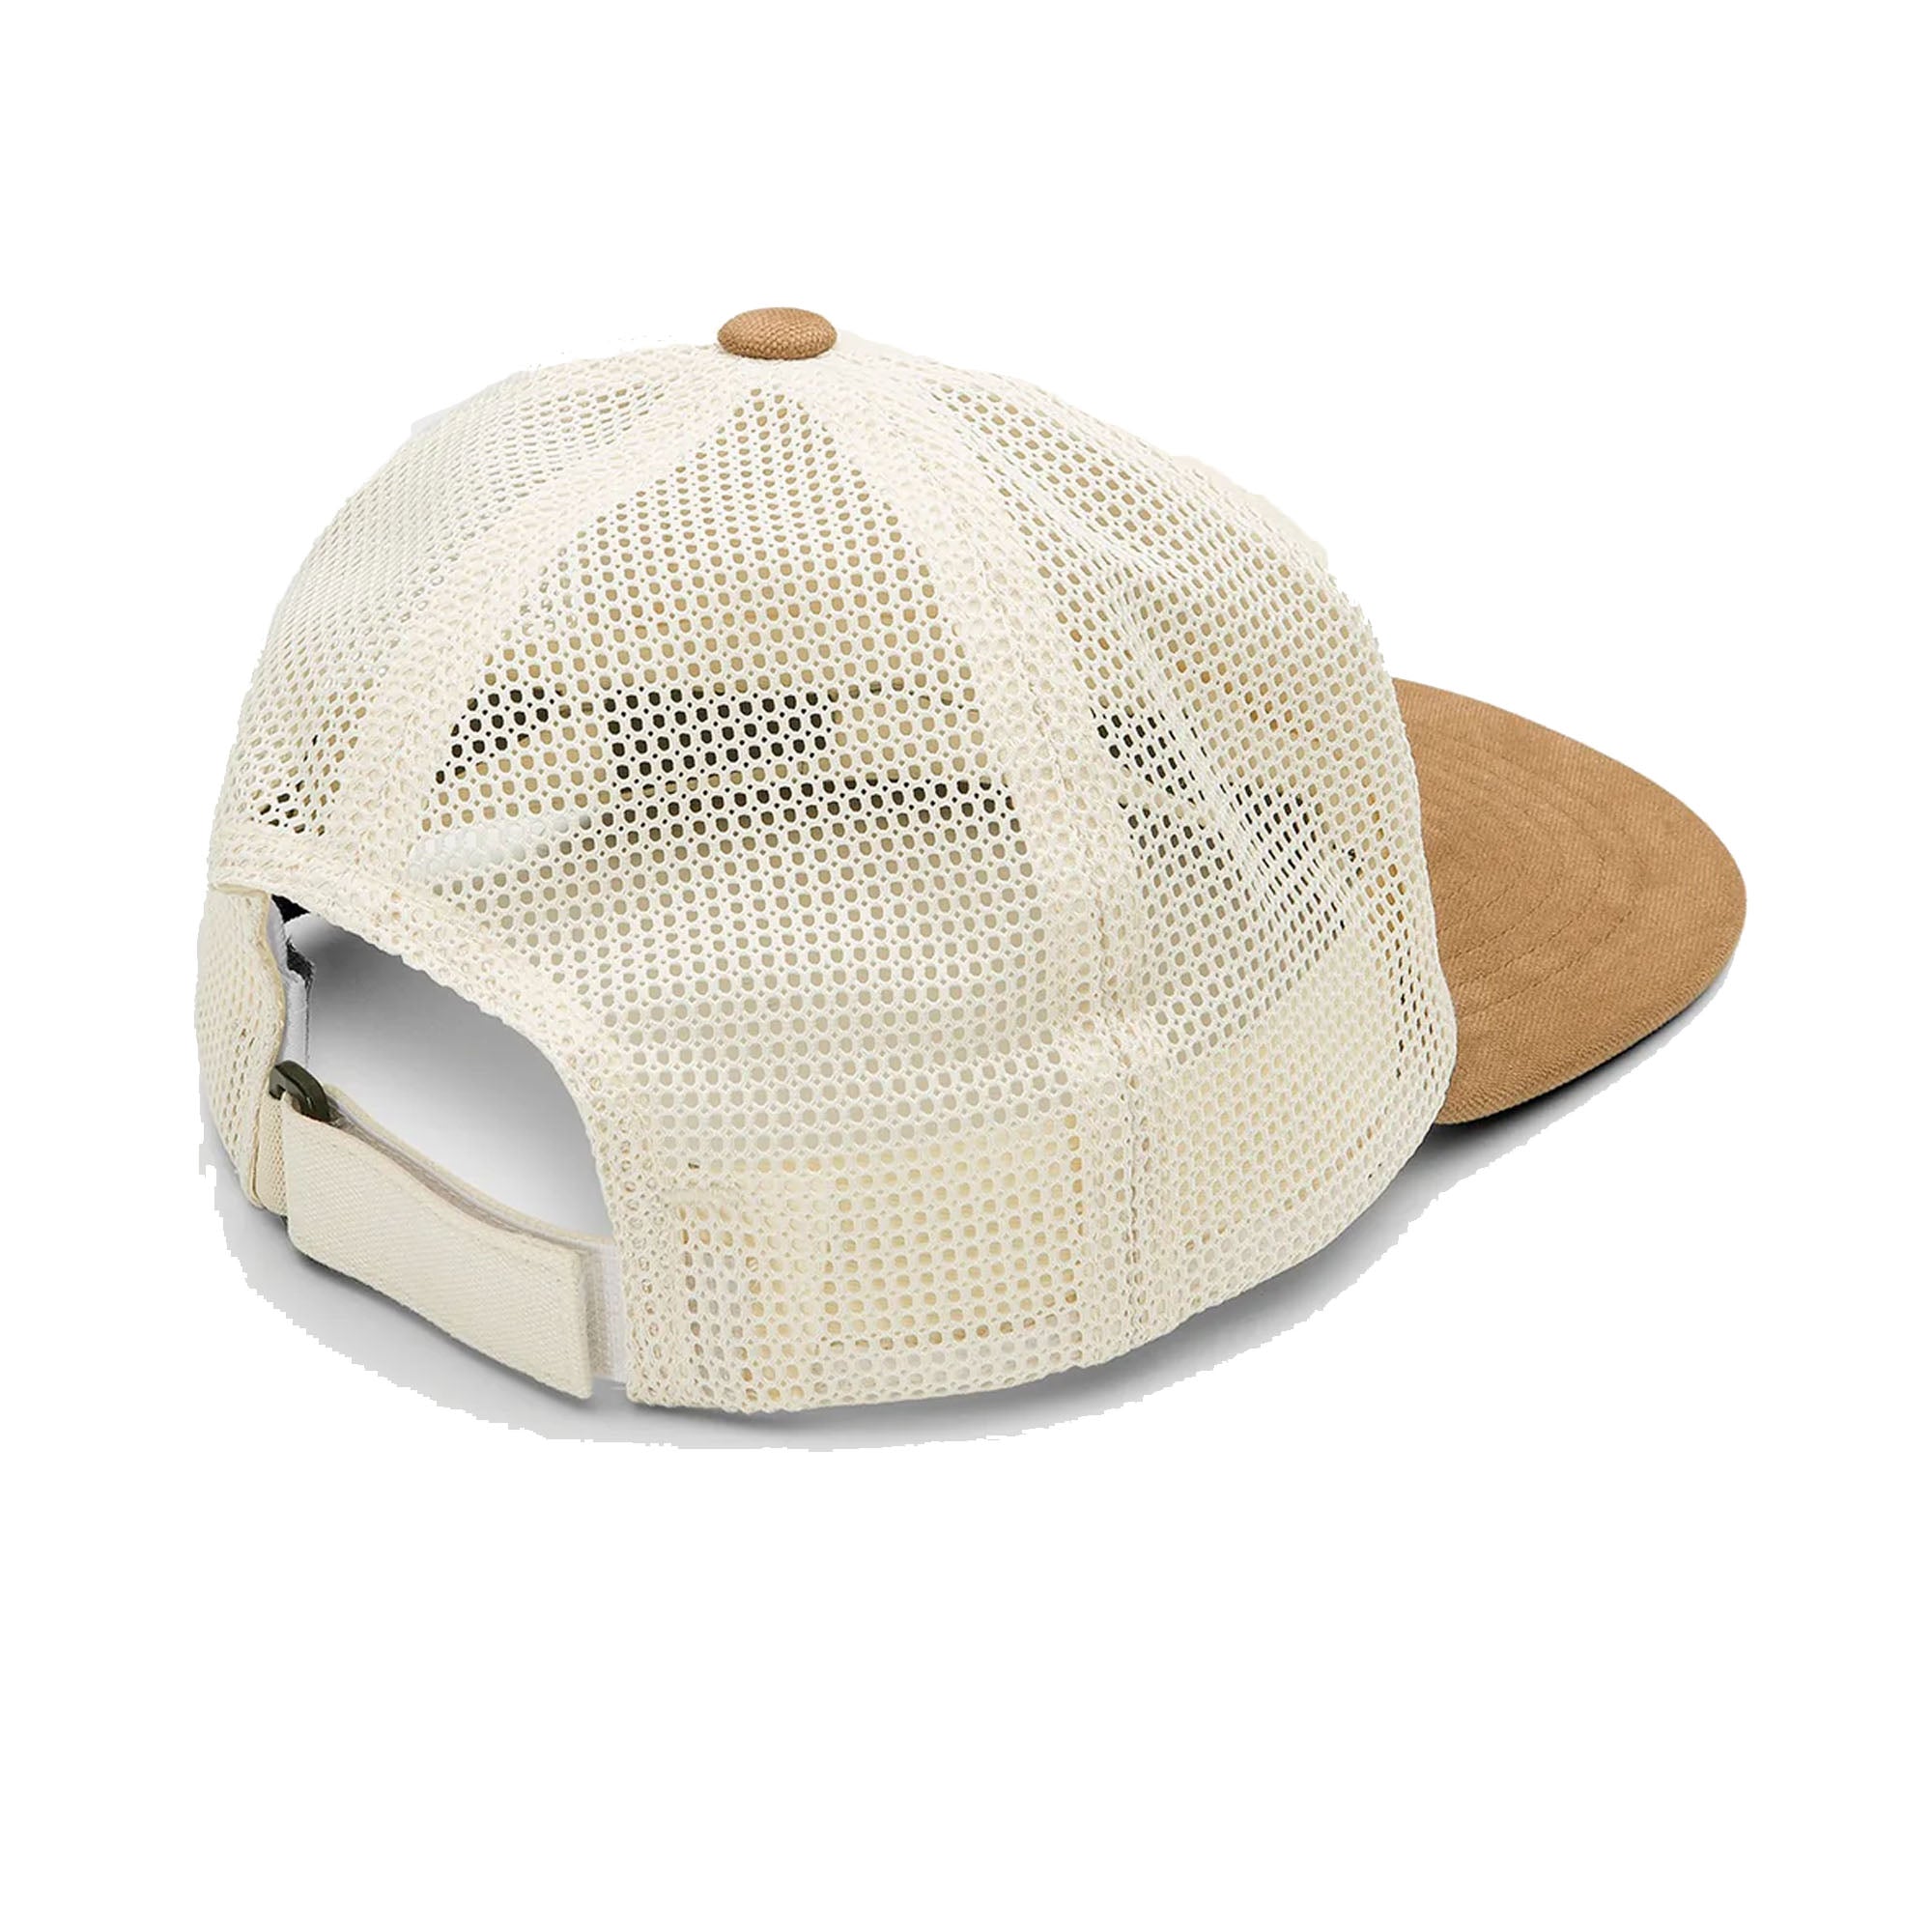 Volcom Stone Earth Tripper Camper Adjustable Men's Hat